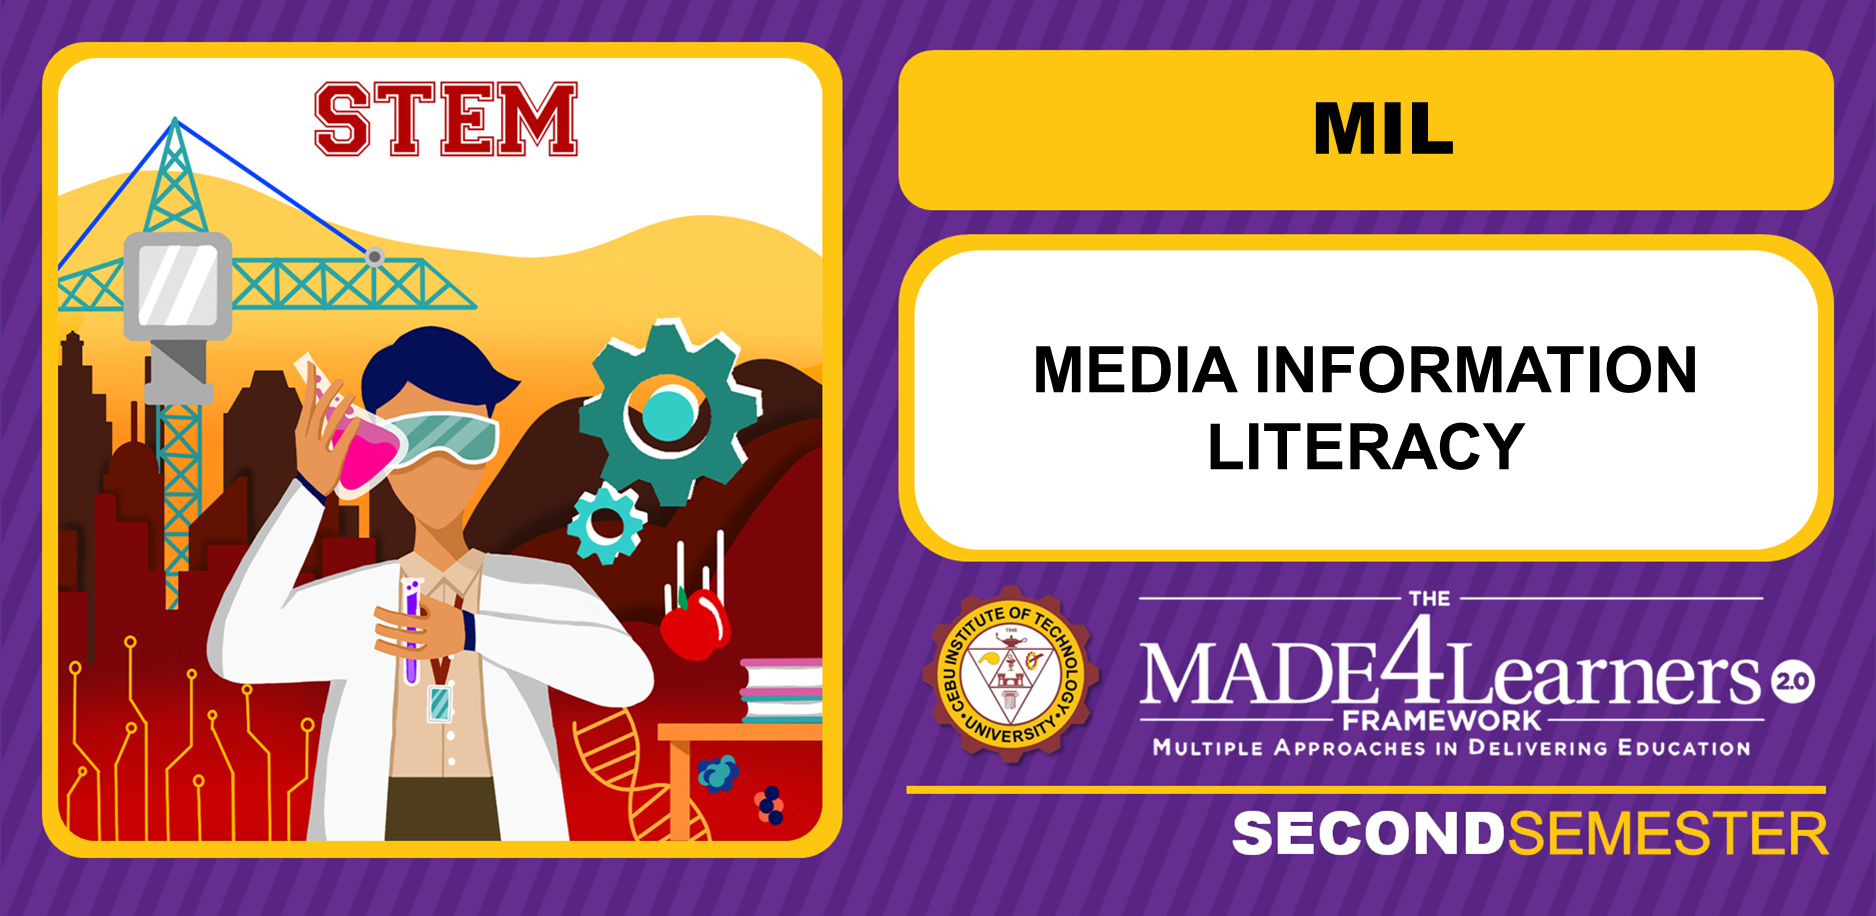 MIL: Media Information Literacy (Gornez)